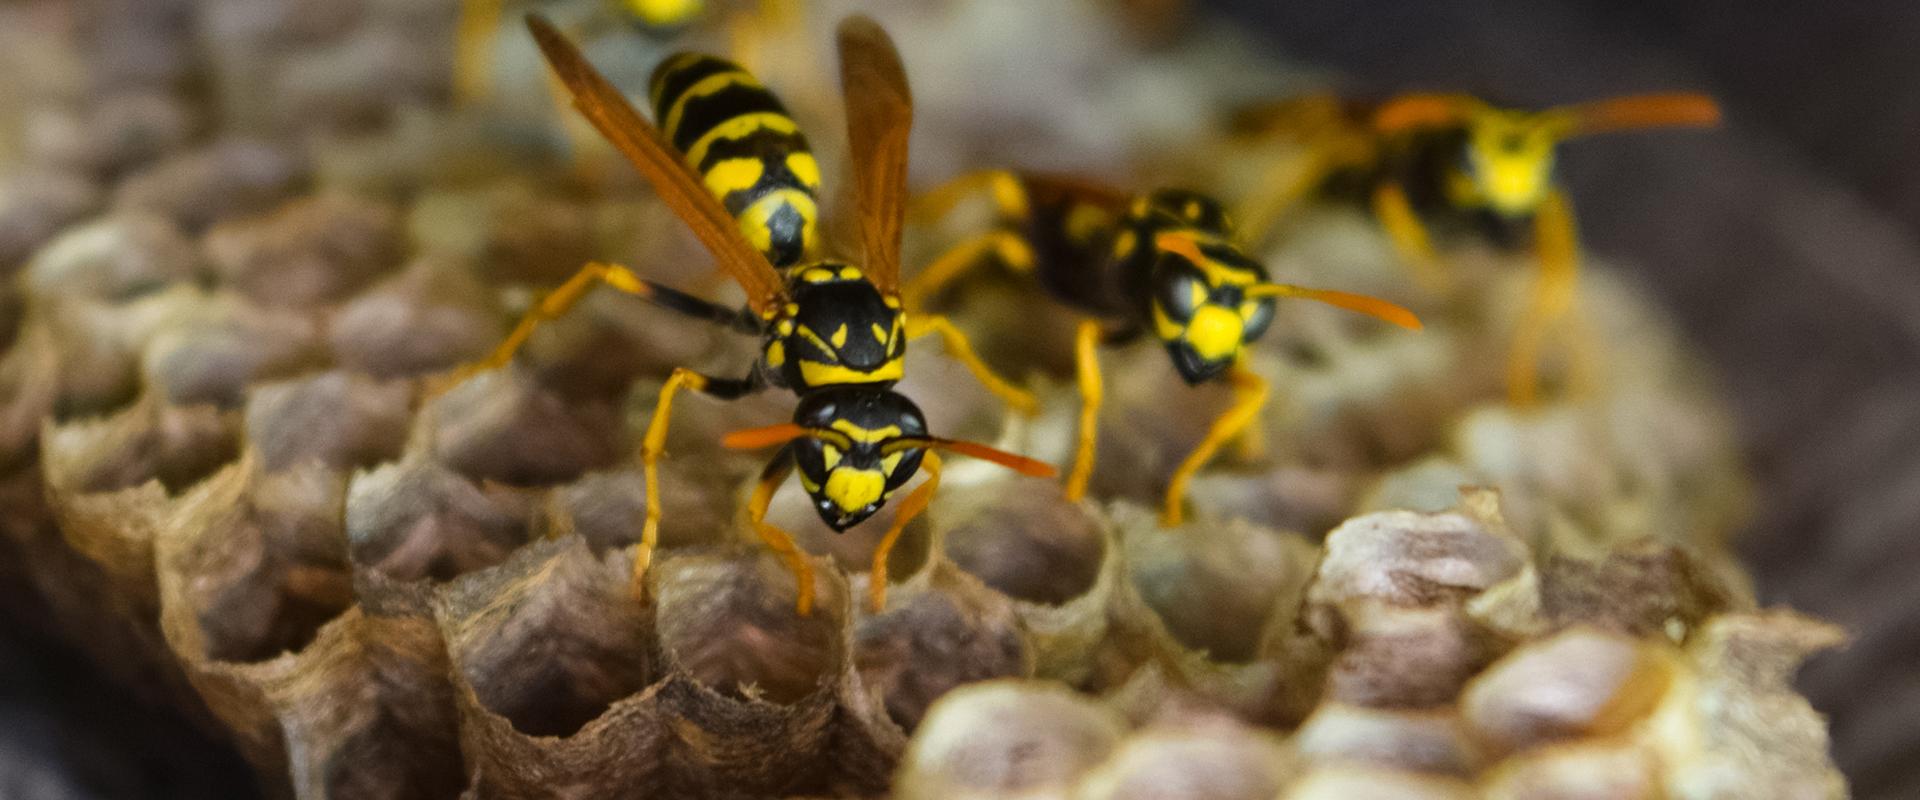 wasps on their nest